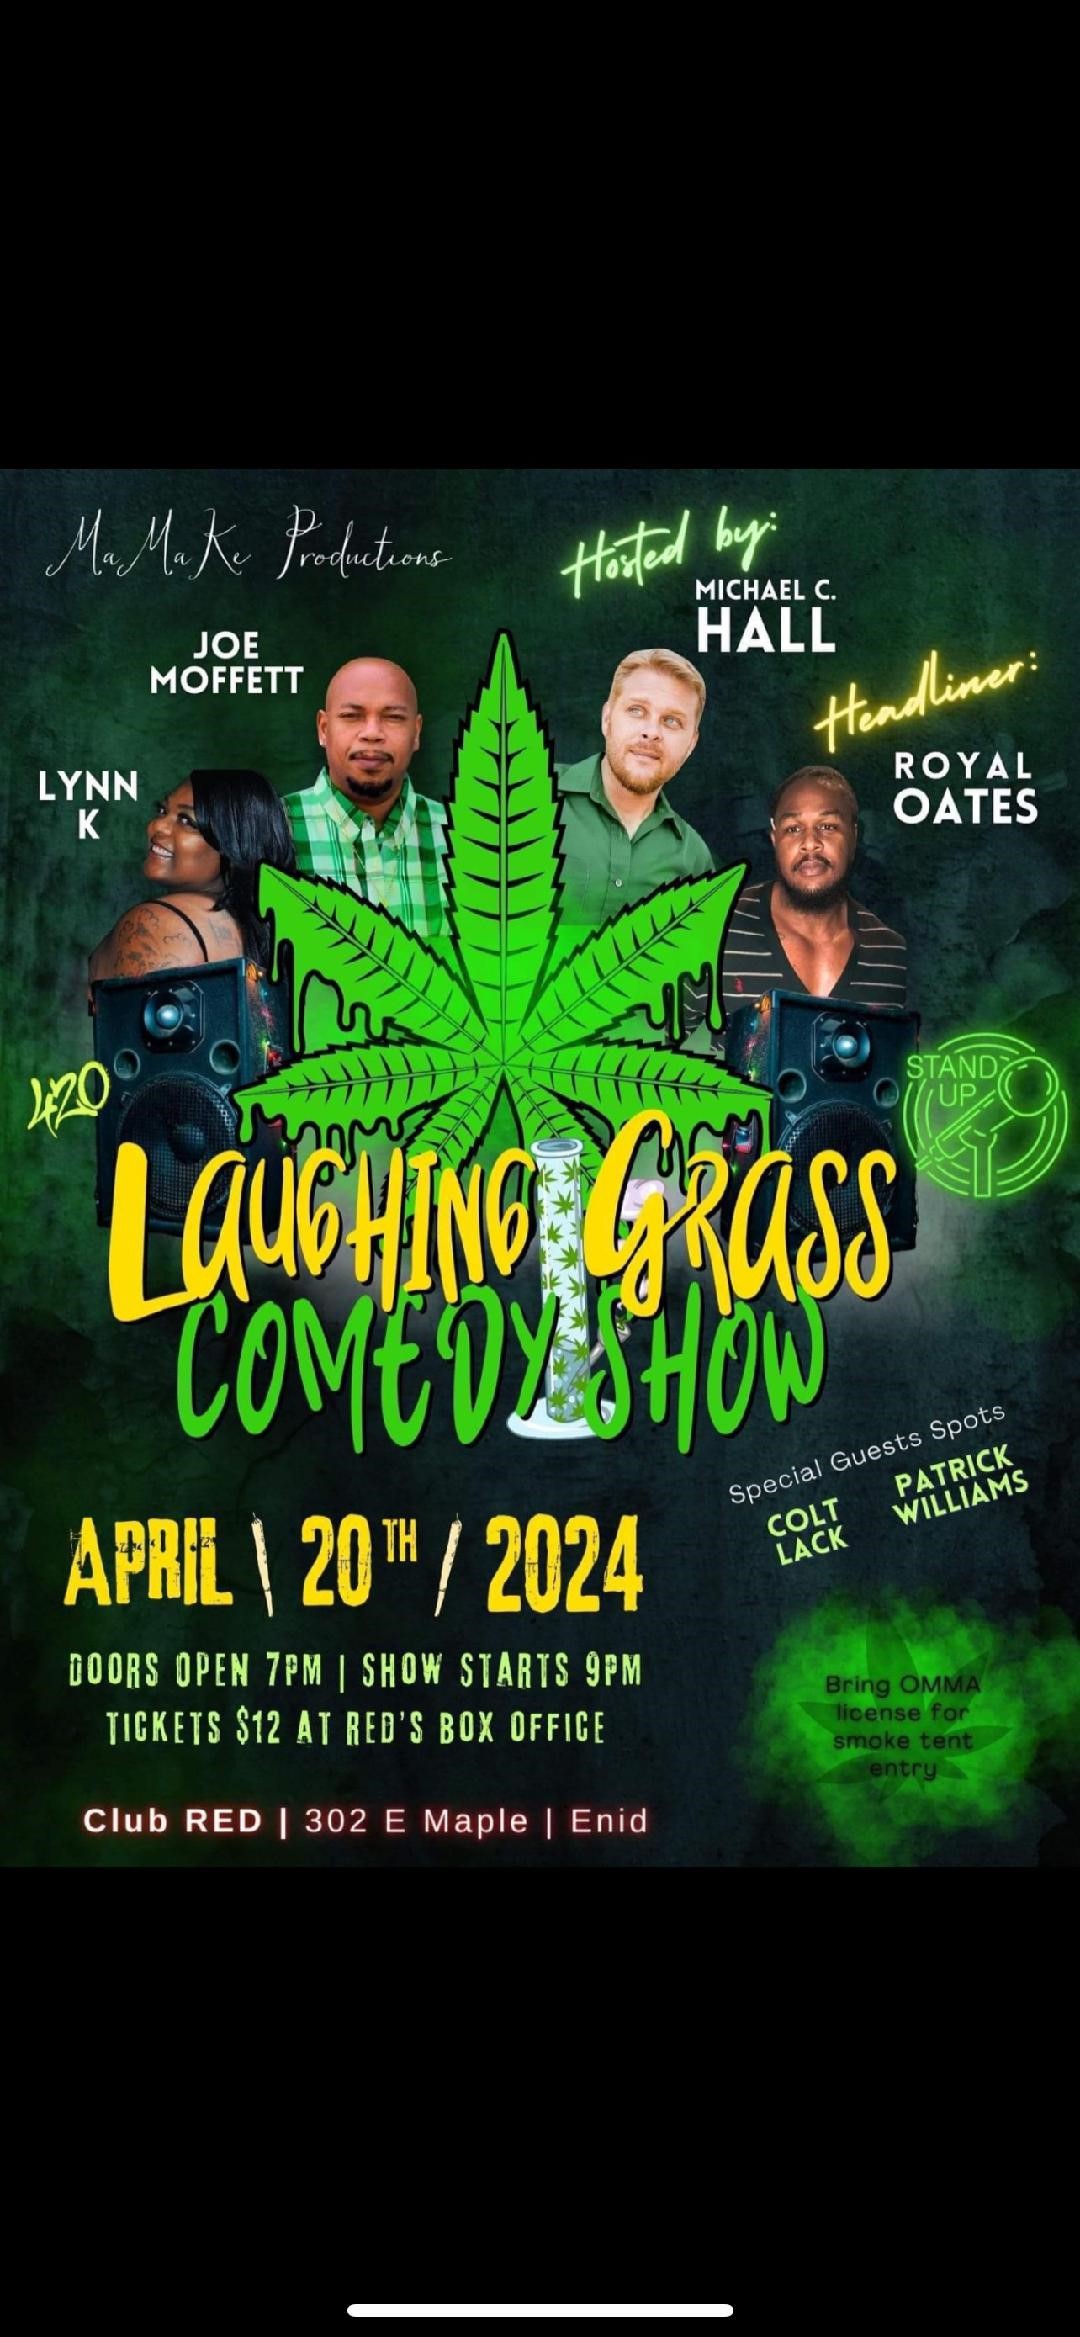 Laughing Grass 4/20 Comedy Show  on abr. 20, 20:00@Boondocks Tavern - Compra entradas y obtén información enBoondocks Tavern 